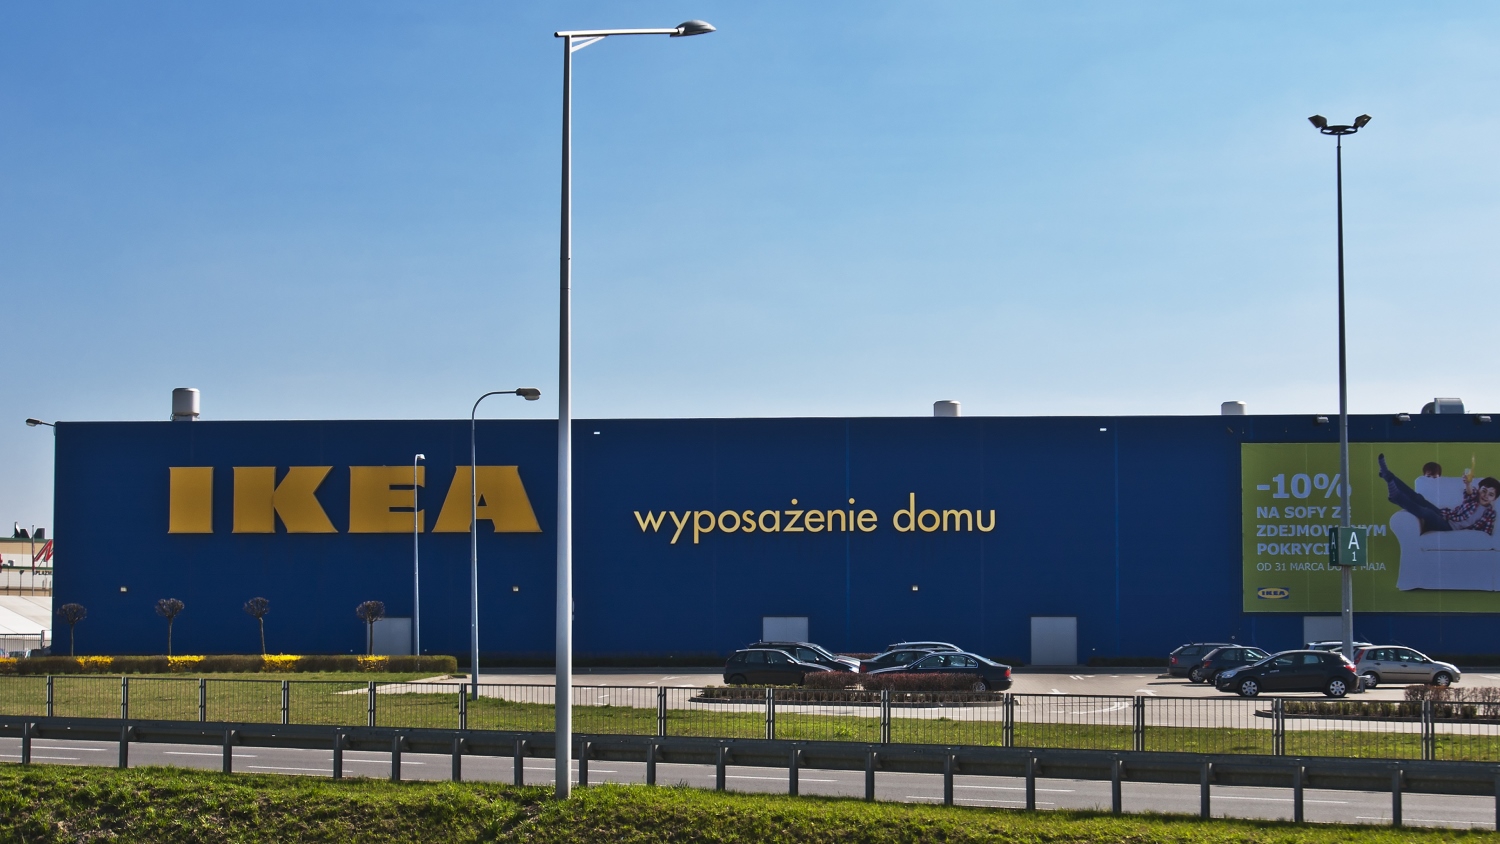 News Article BNP Paribas Real Estate Ikea Poland property management retail